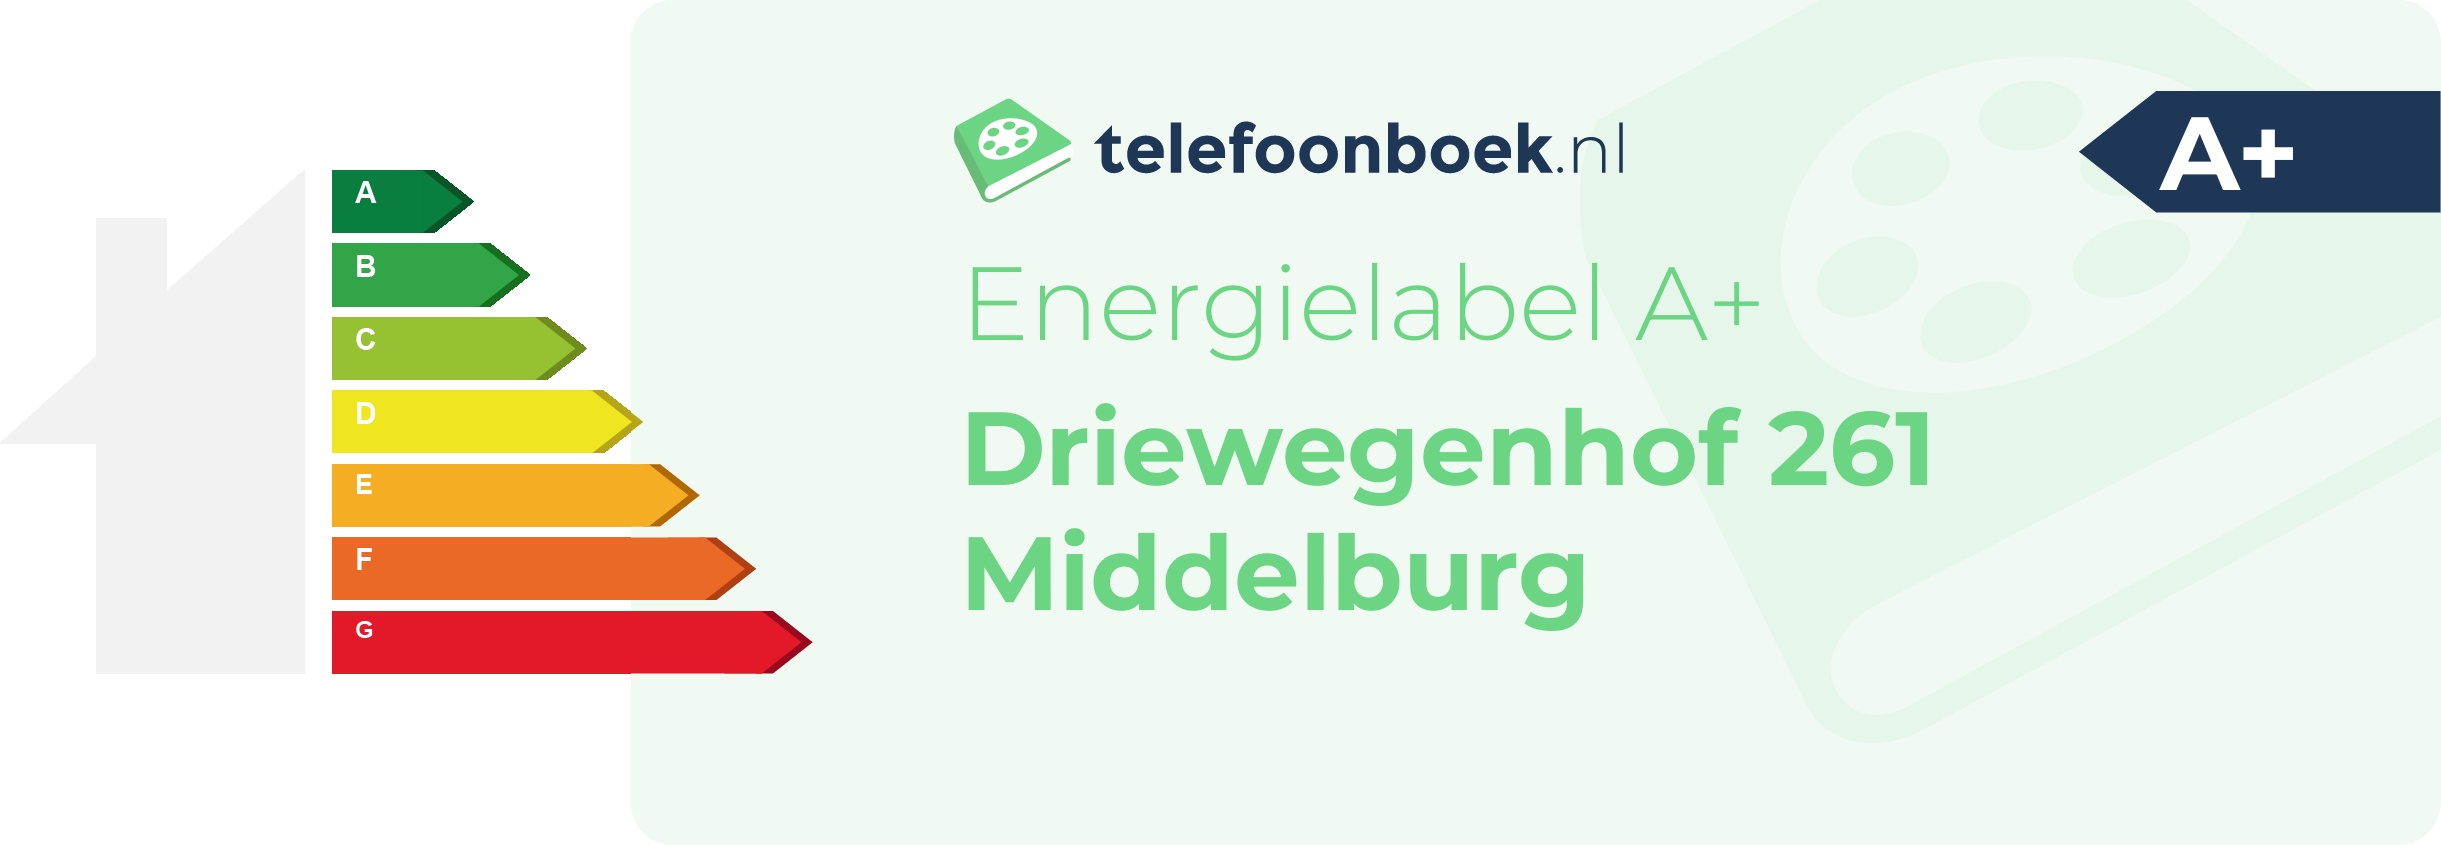 Energielabel Driewegenhof 261 Middelburg